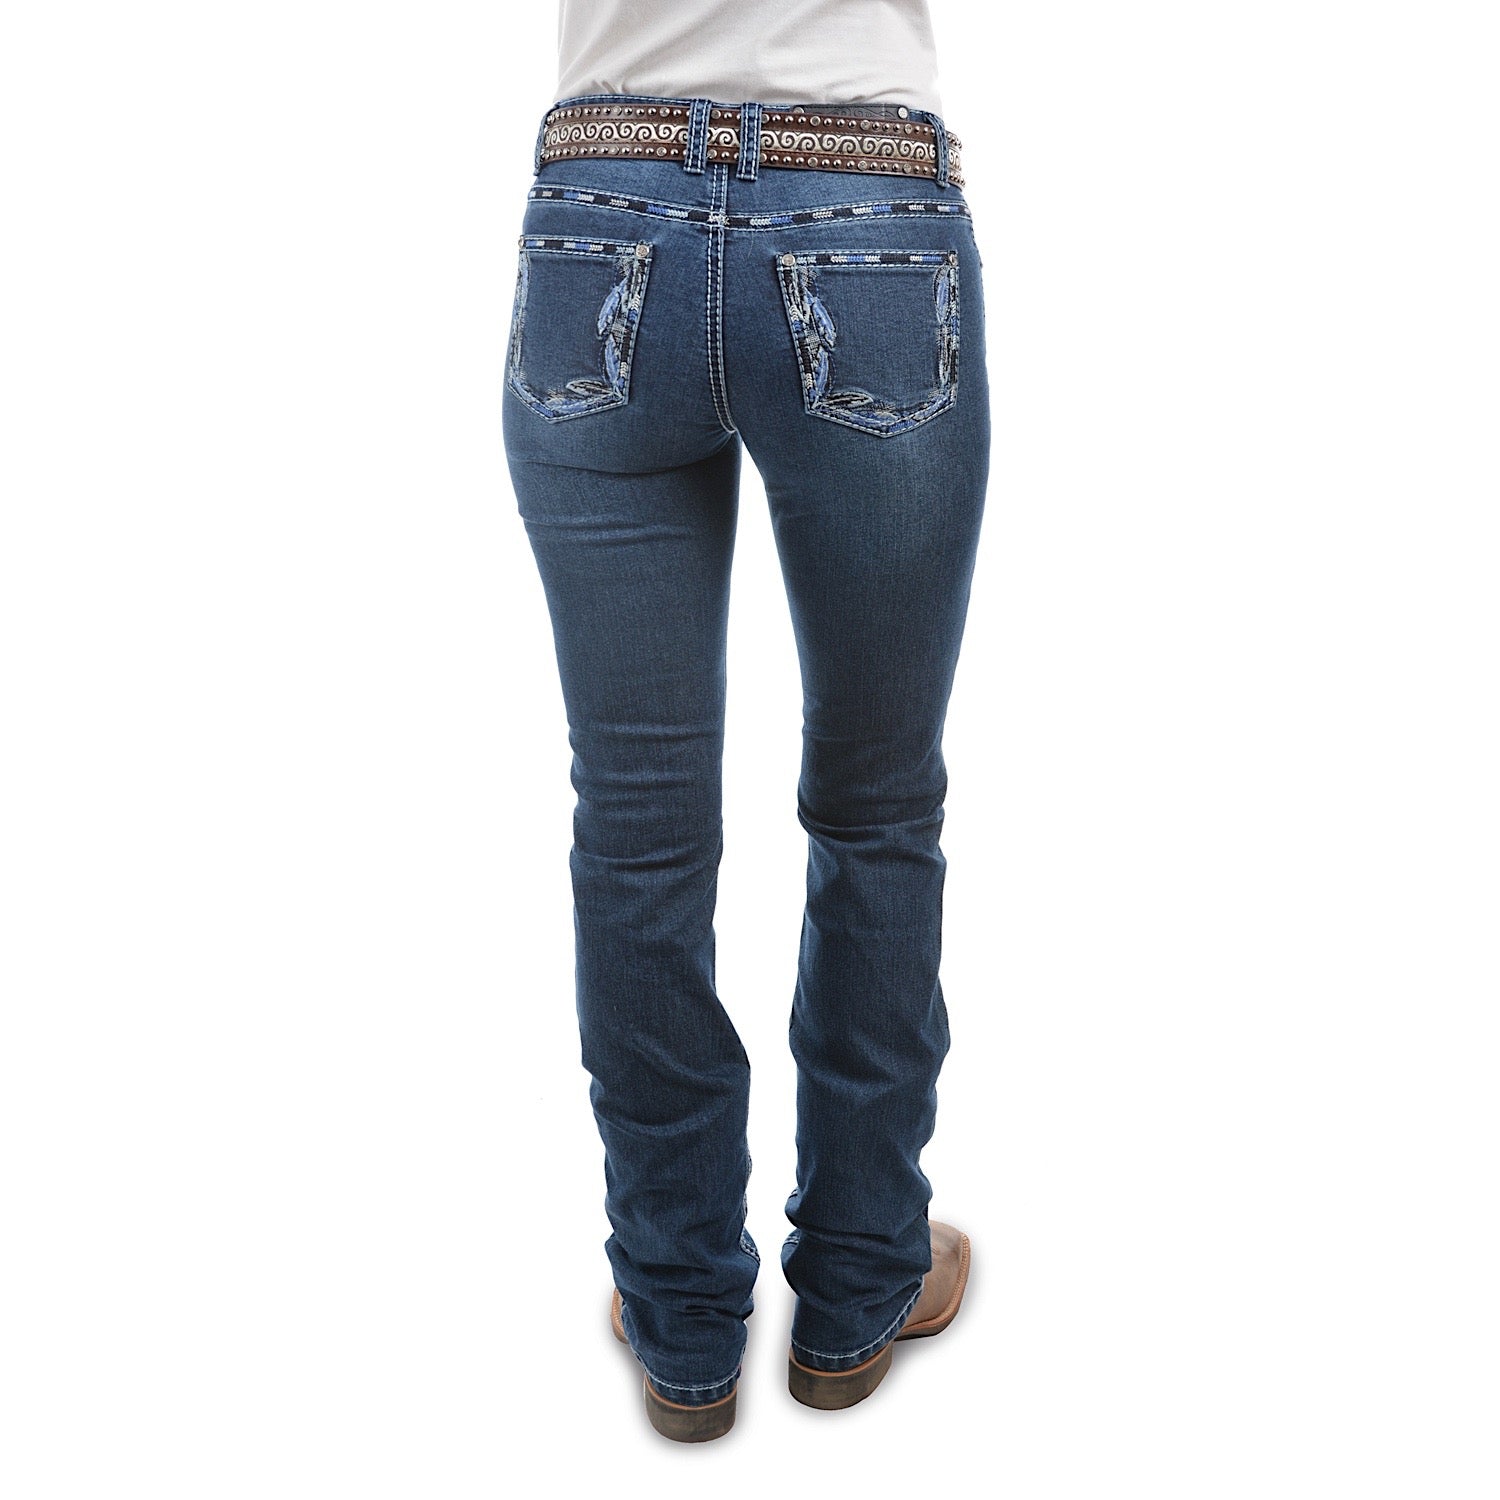 Buy Plus Size Women Pure Denim -Wide Leg Jeans- HIGH Rise - Non Stretch  Fabric - Faded Denim Blue Color - Waist Size 36